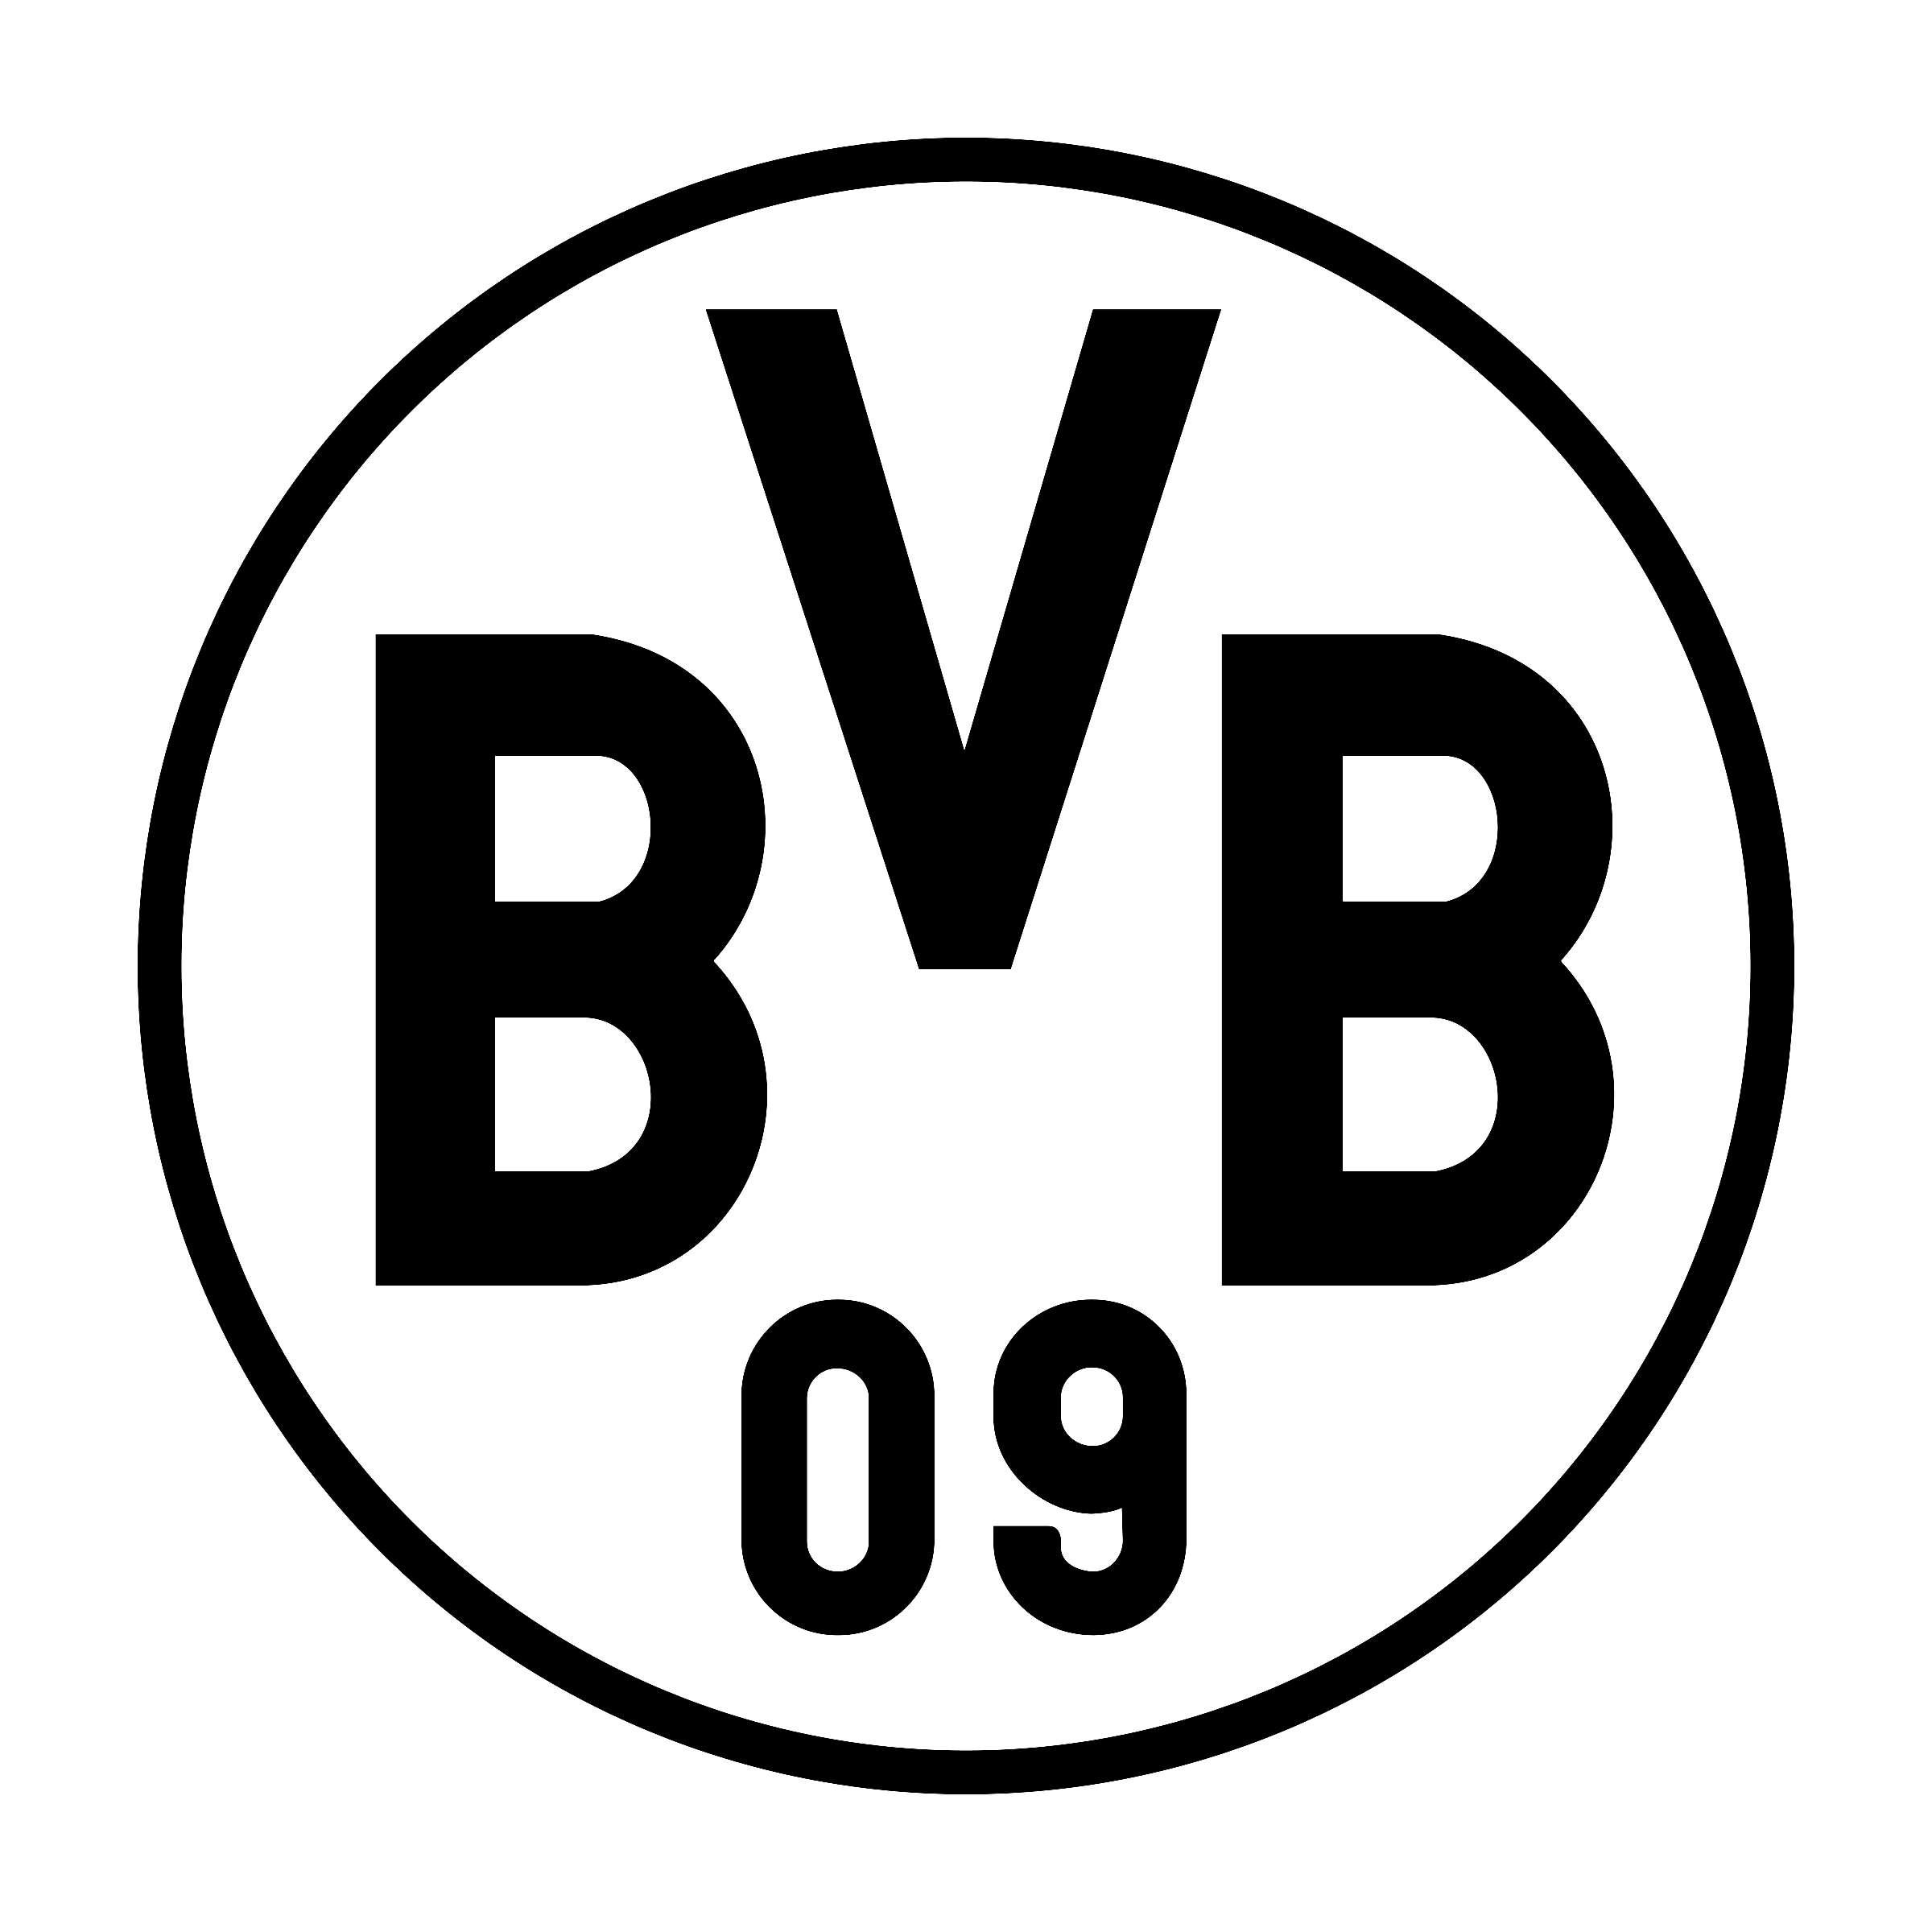 Dortmund Logo - BvB Logo PNG Transparent & SVG Vector - Freebie Supply